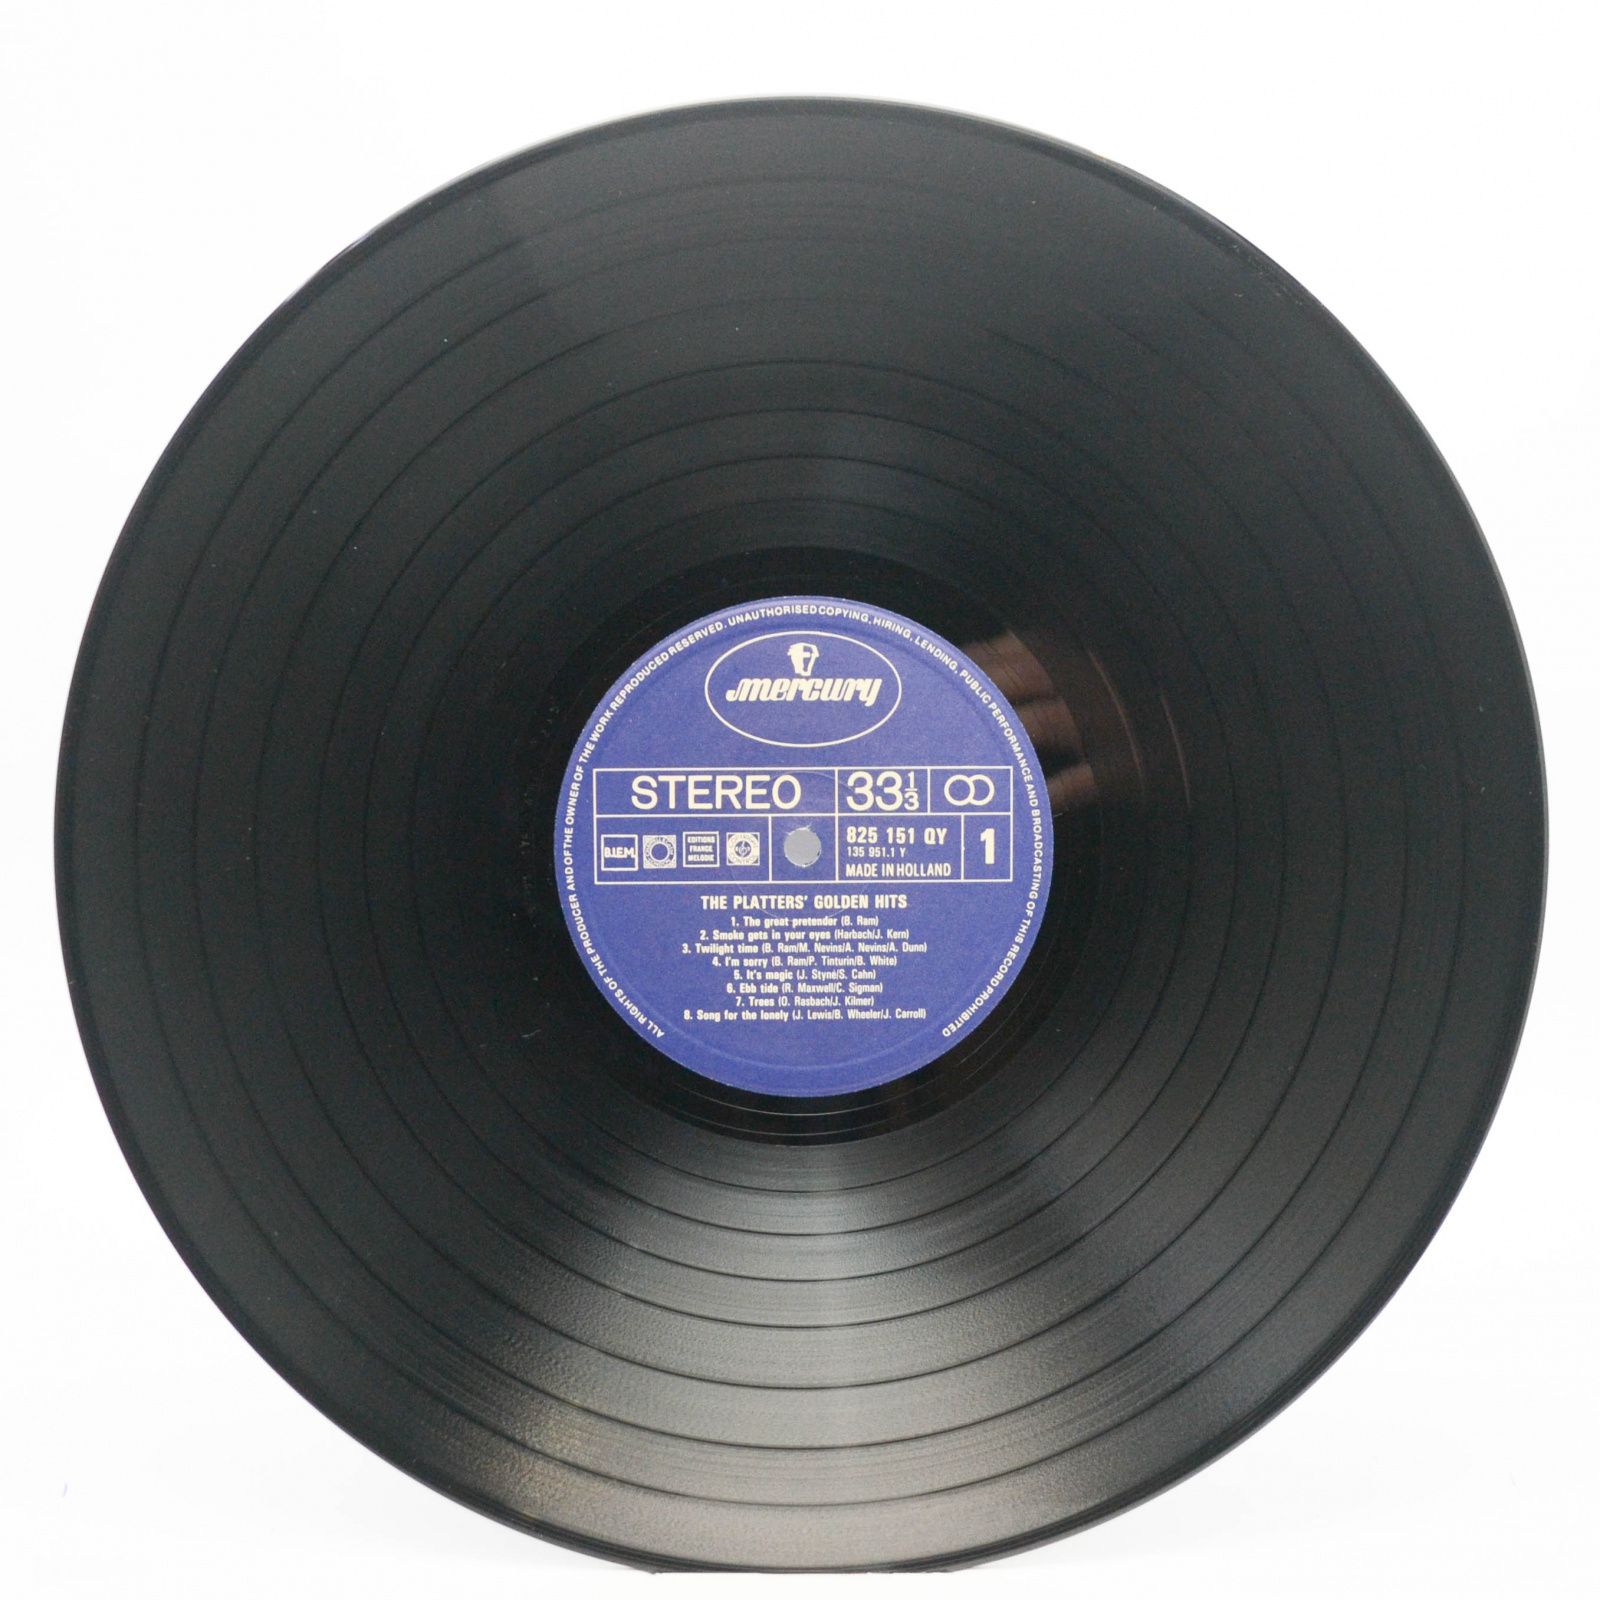 Platters — The Platters' Golden Hits, 1977